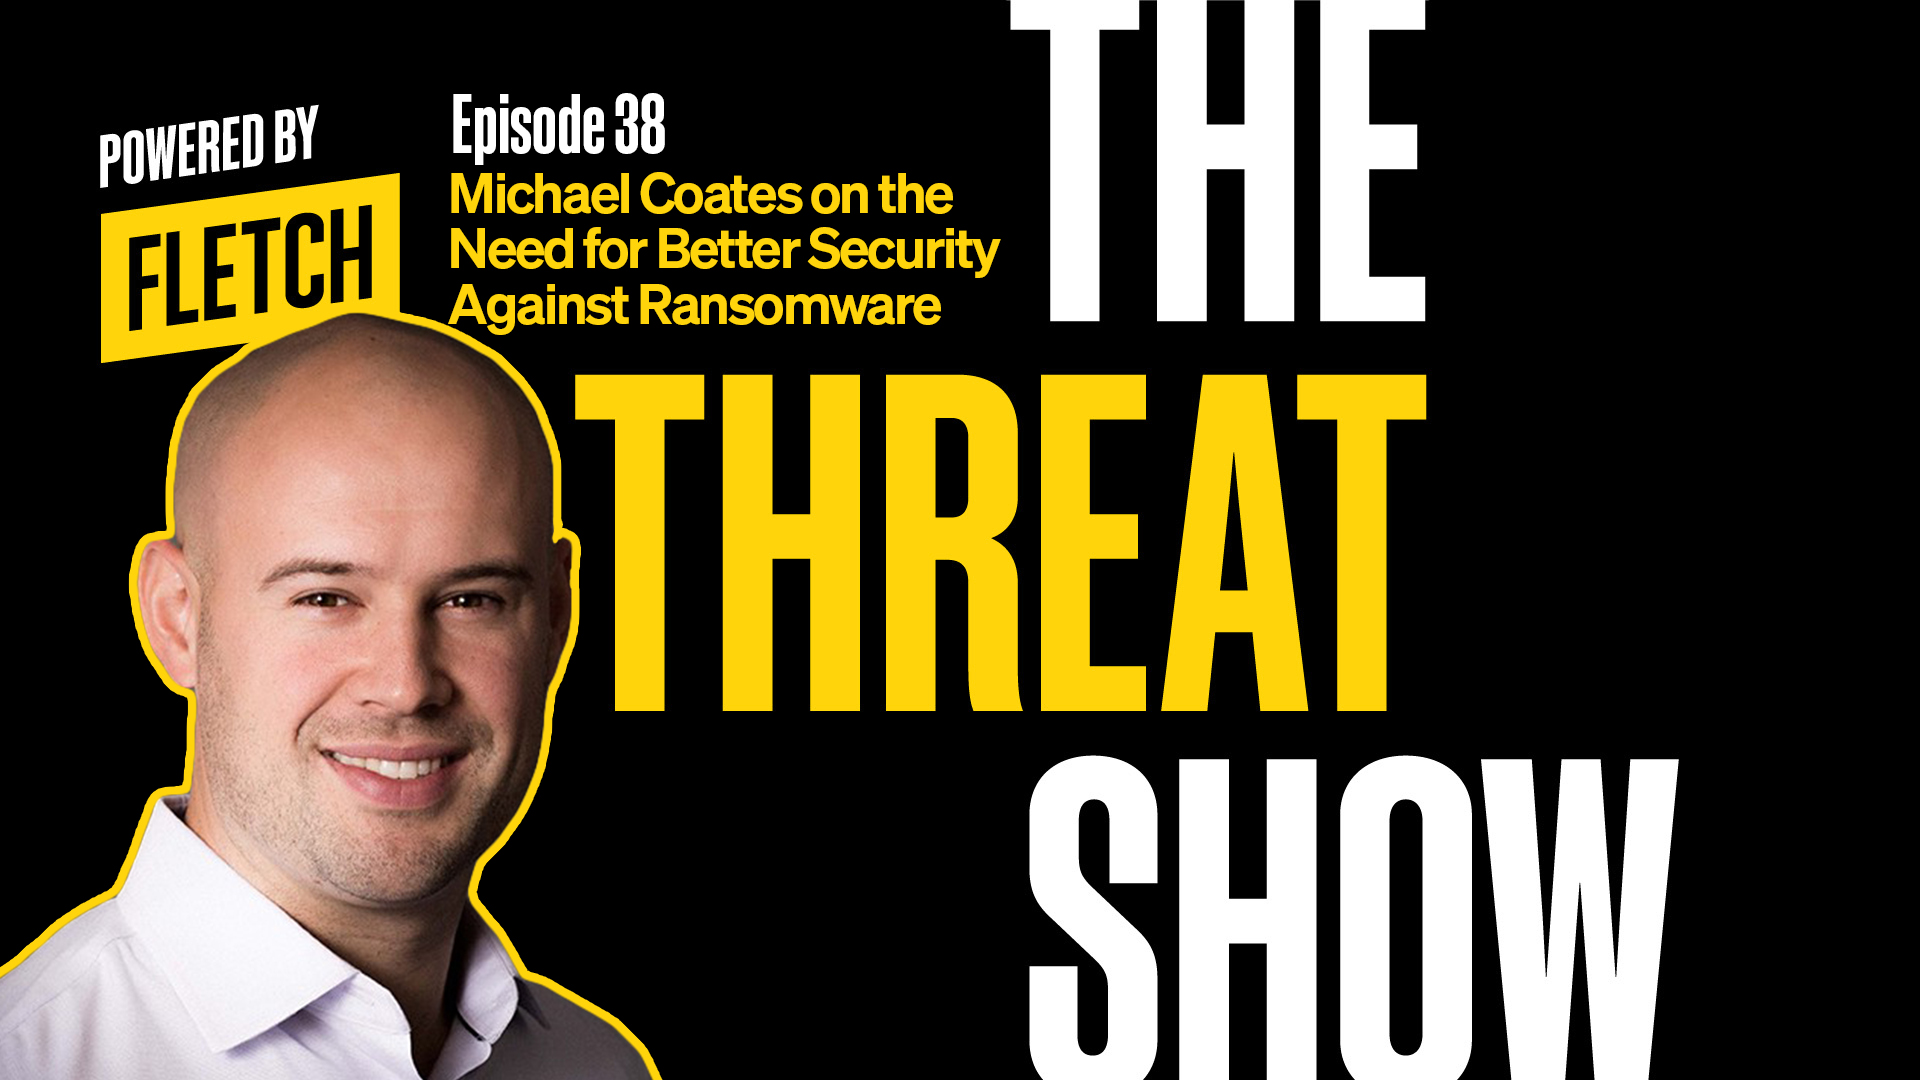 The Threat Show Ep. 38 w/ Michael Coates